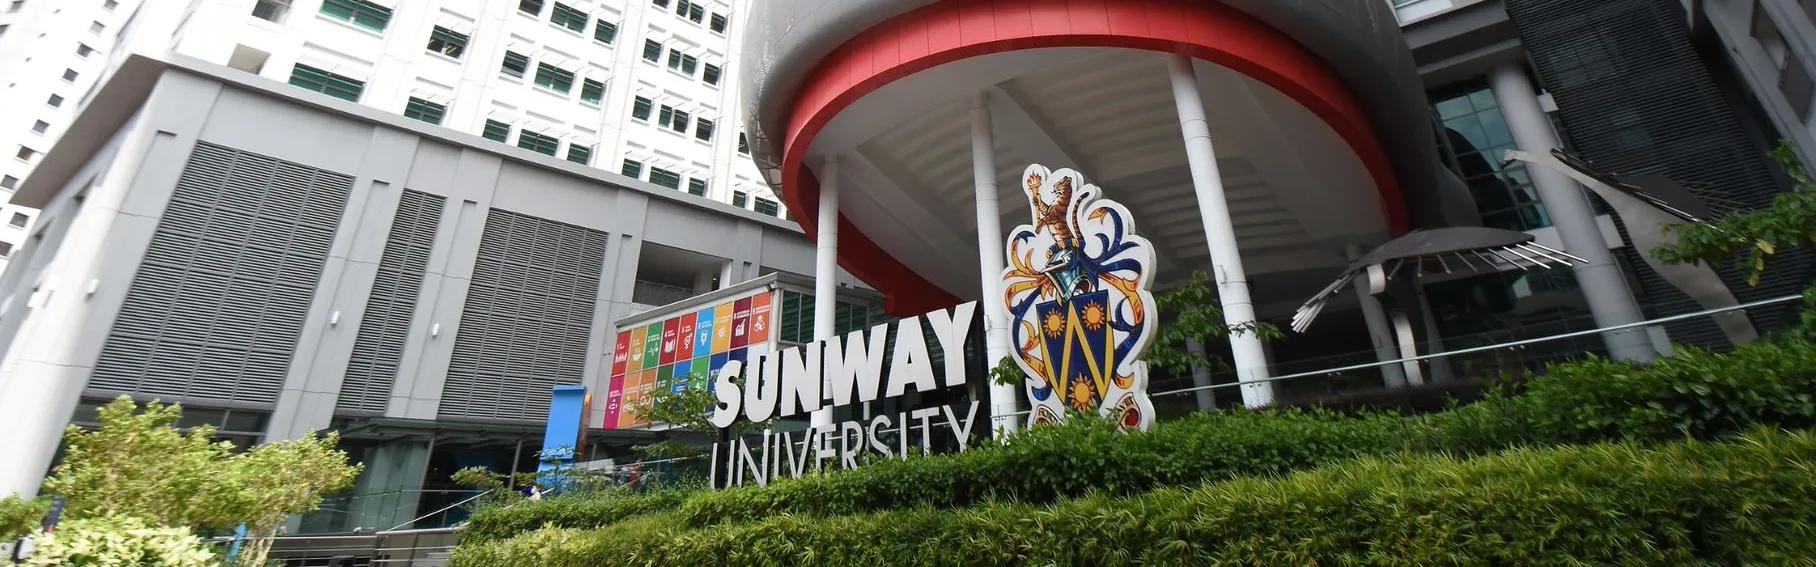 Sunway University Building